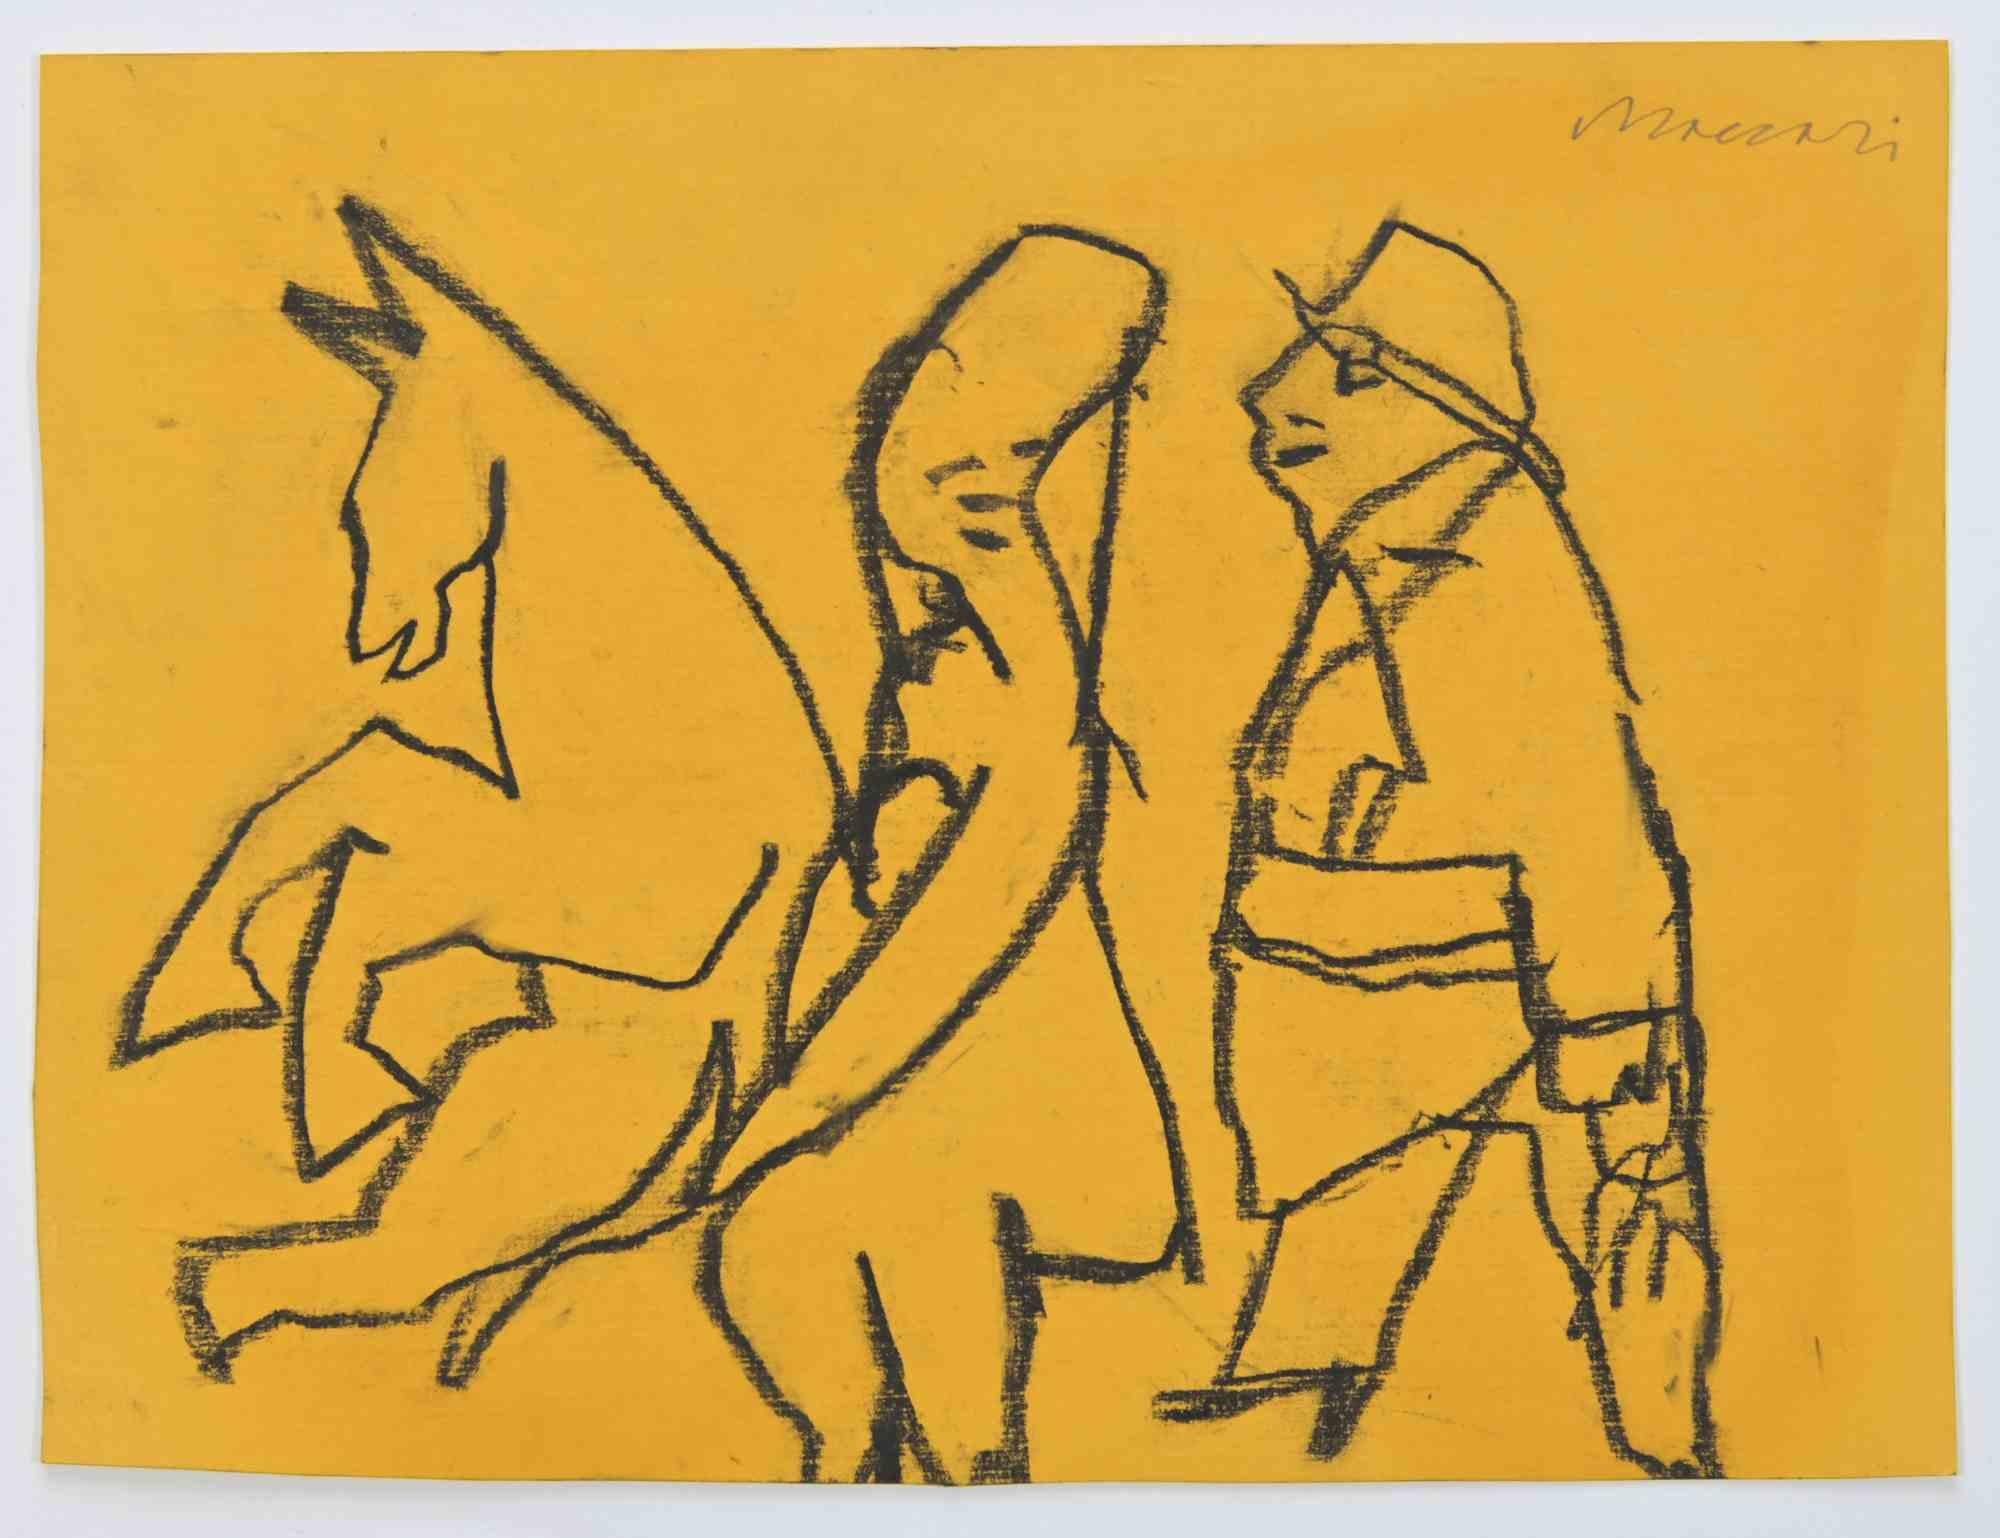 The Spouse and the Horse – Zeichnung von Mino Maccari – 1970er Jahre